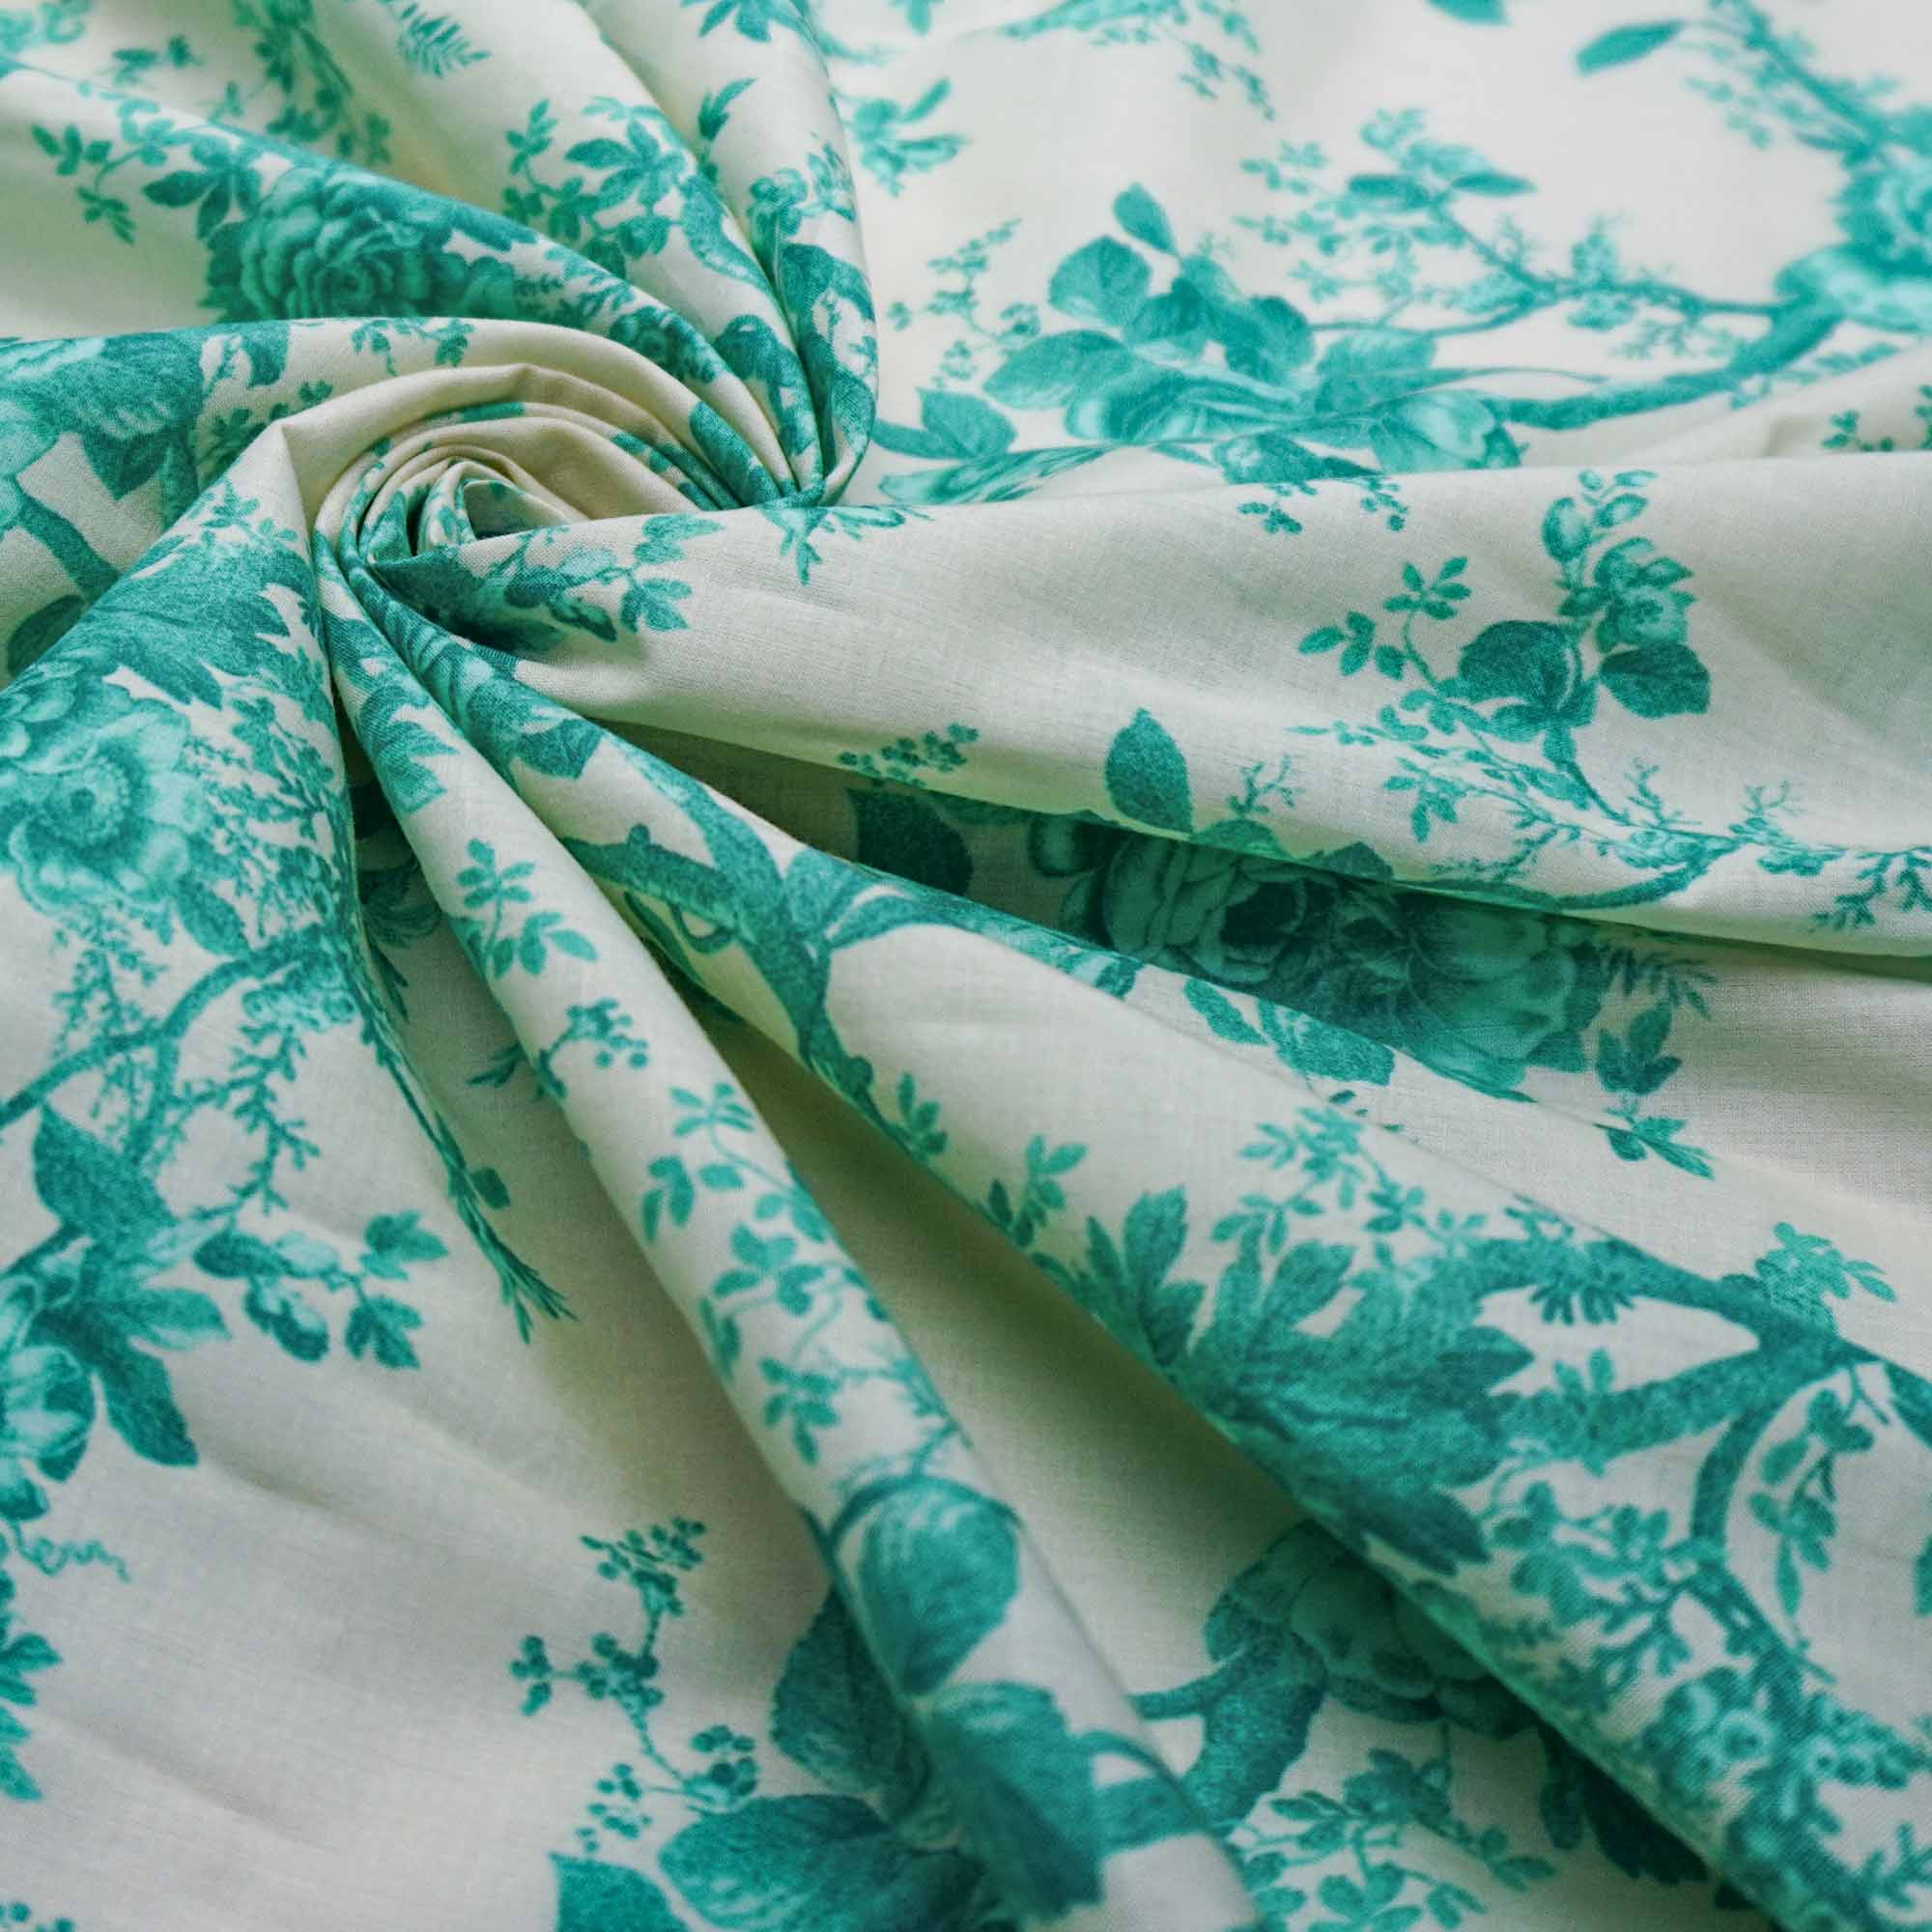 Tecido cambraia de algodão puro nude estampado floral (tecido italiano legítimo)